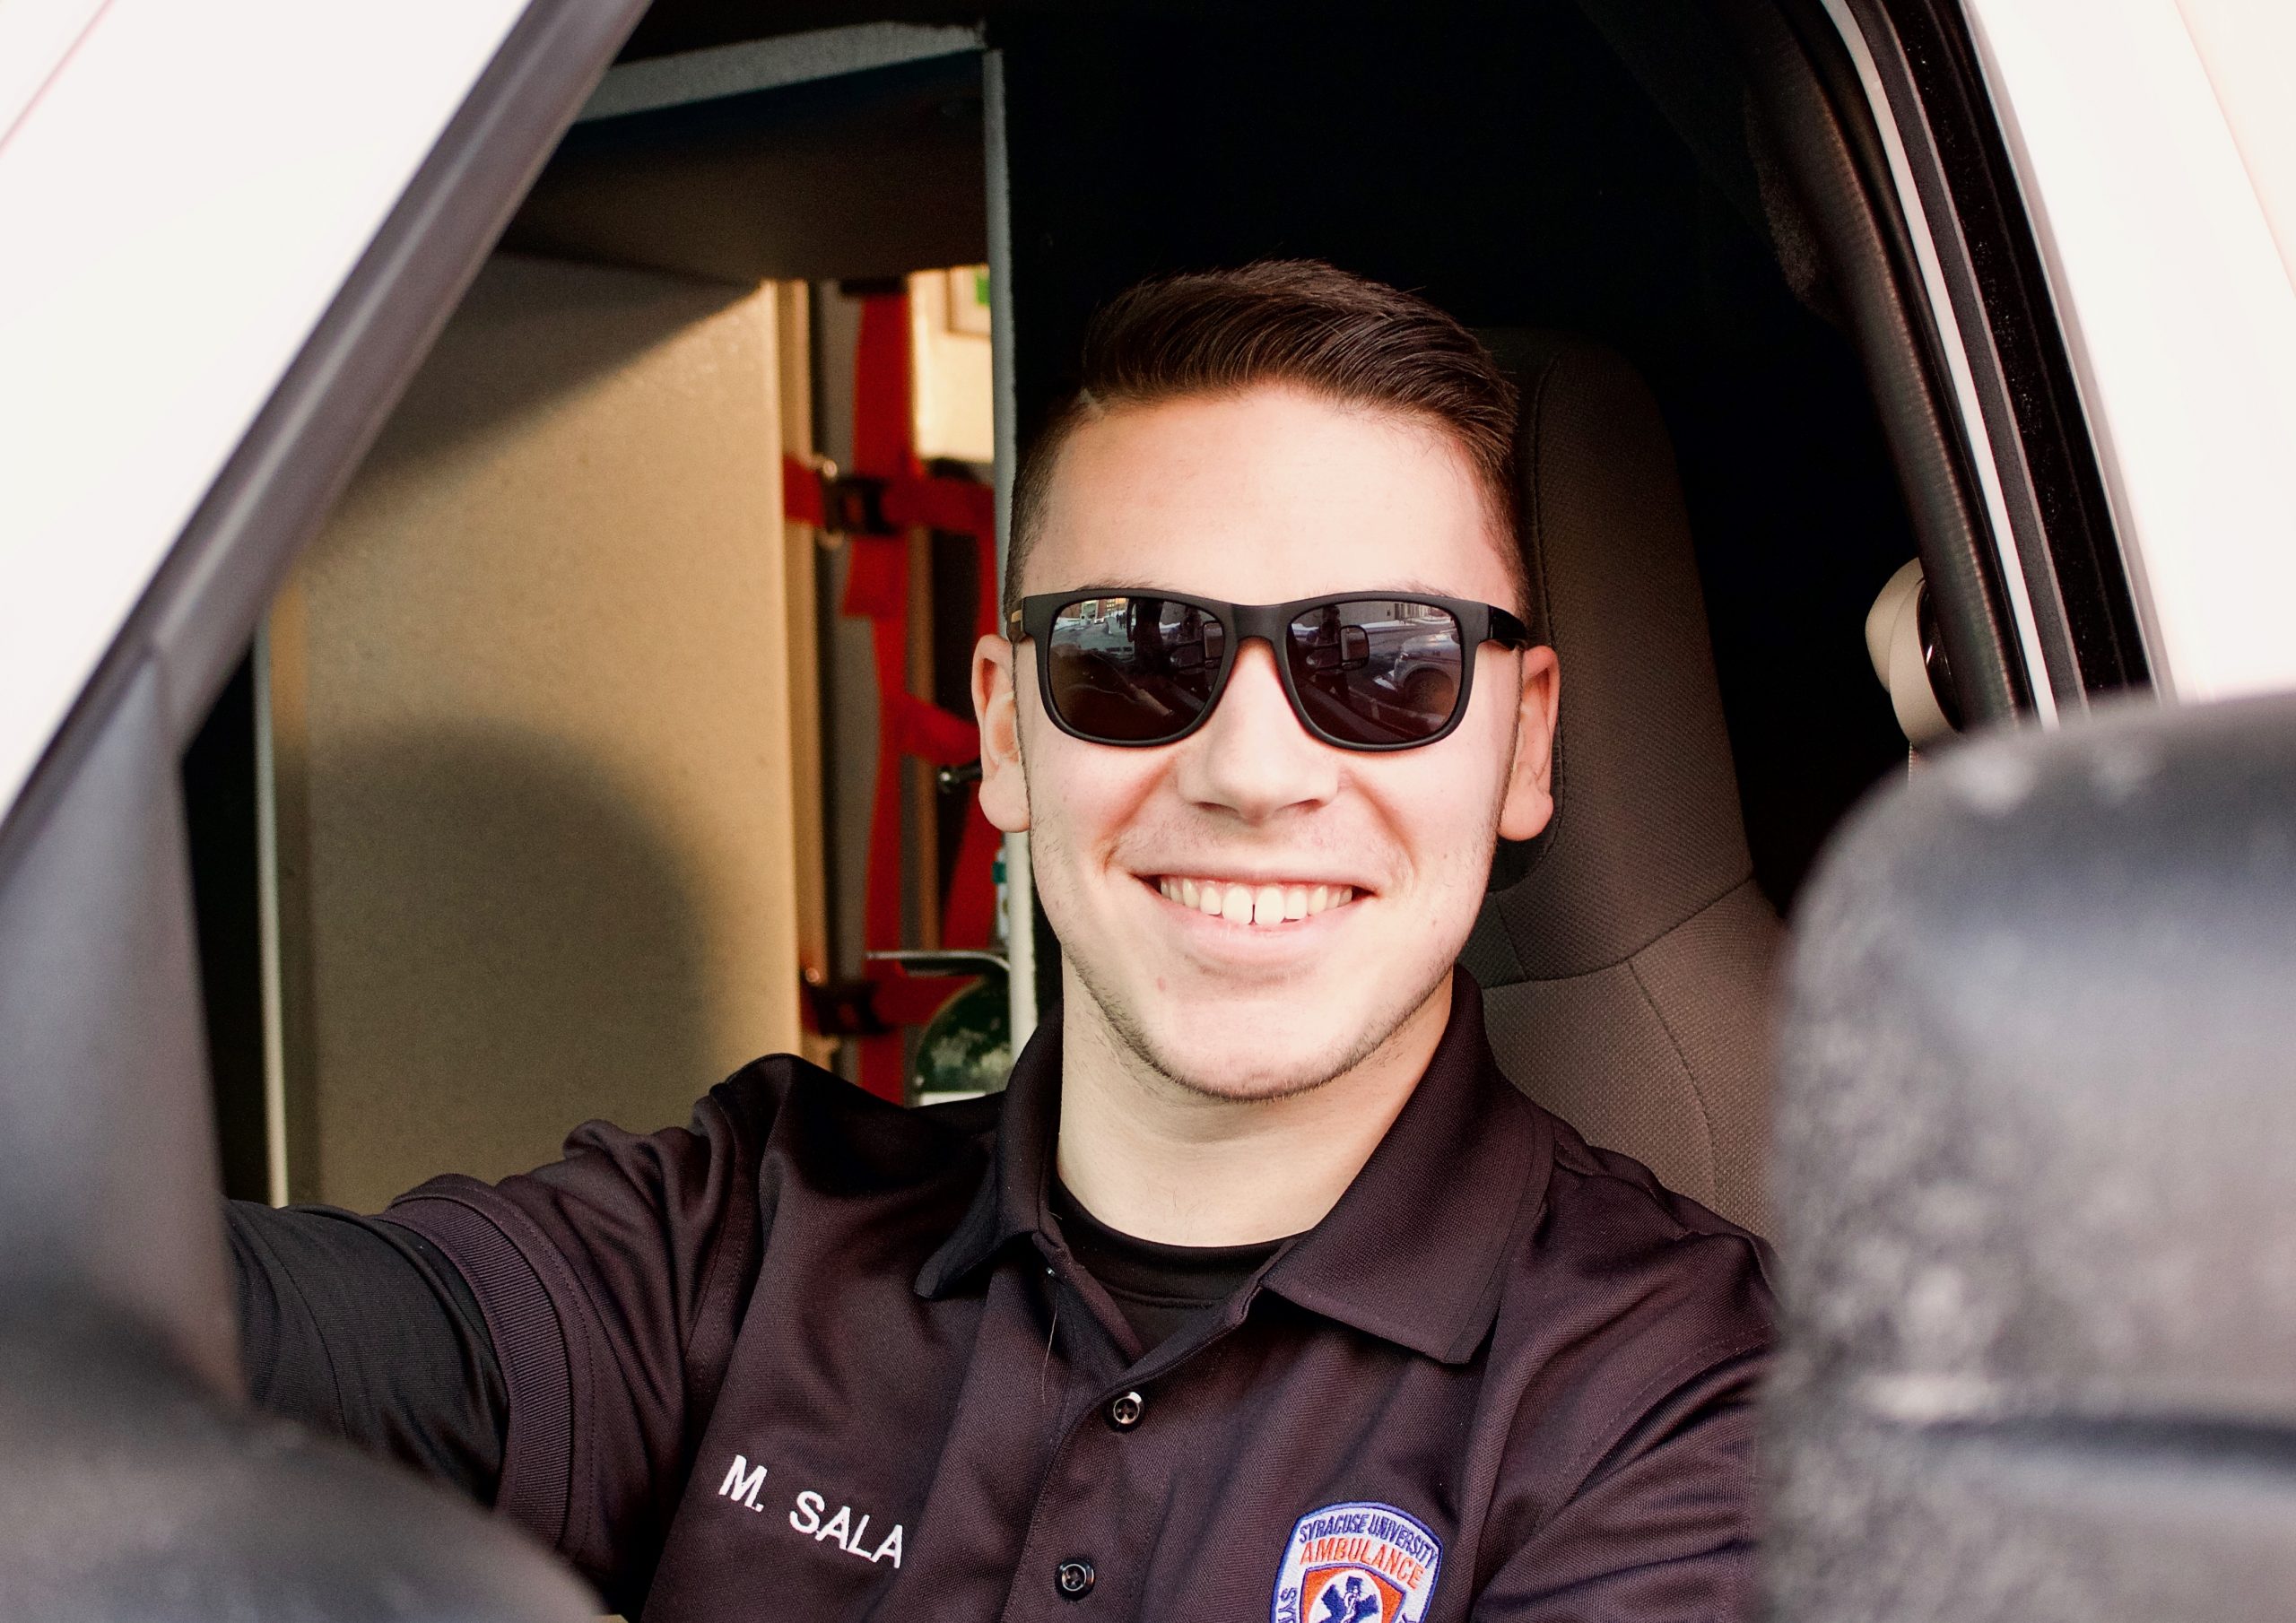 Matthew-Sala in SUA uniform sitting in ambulance